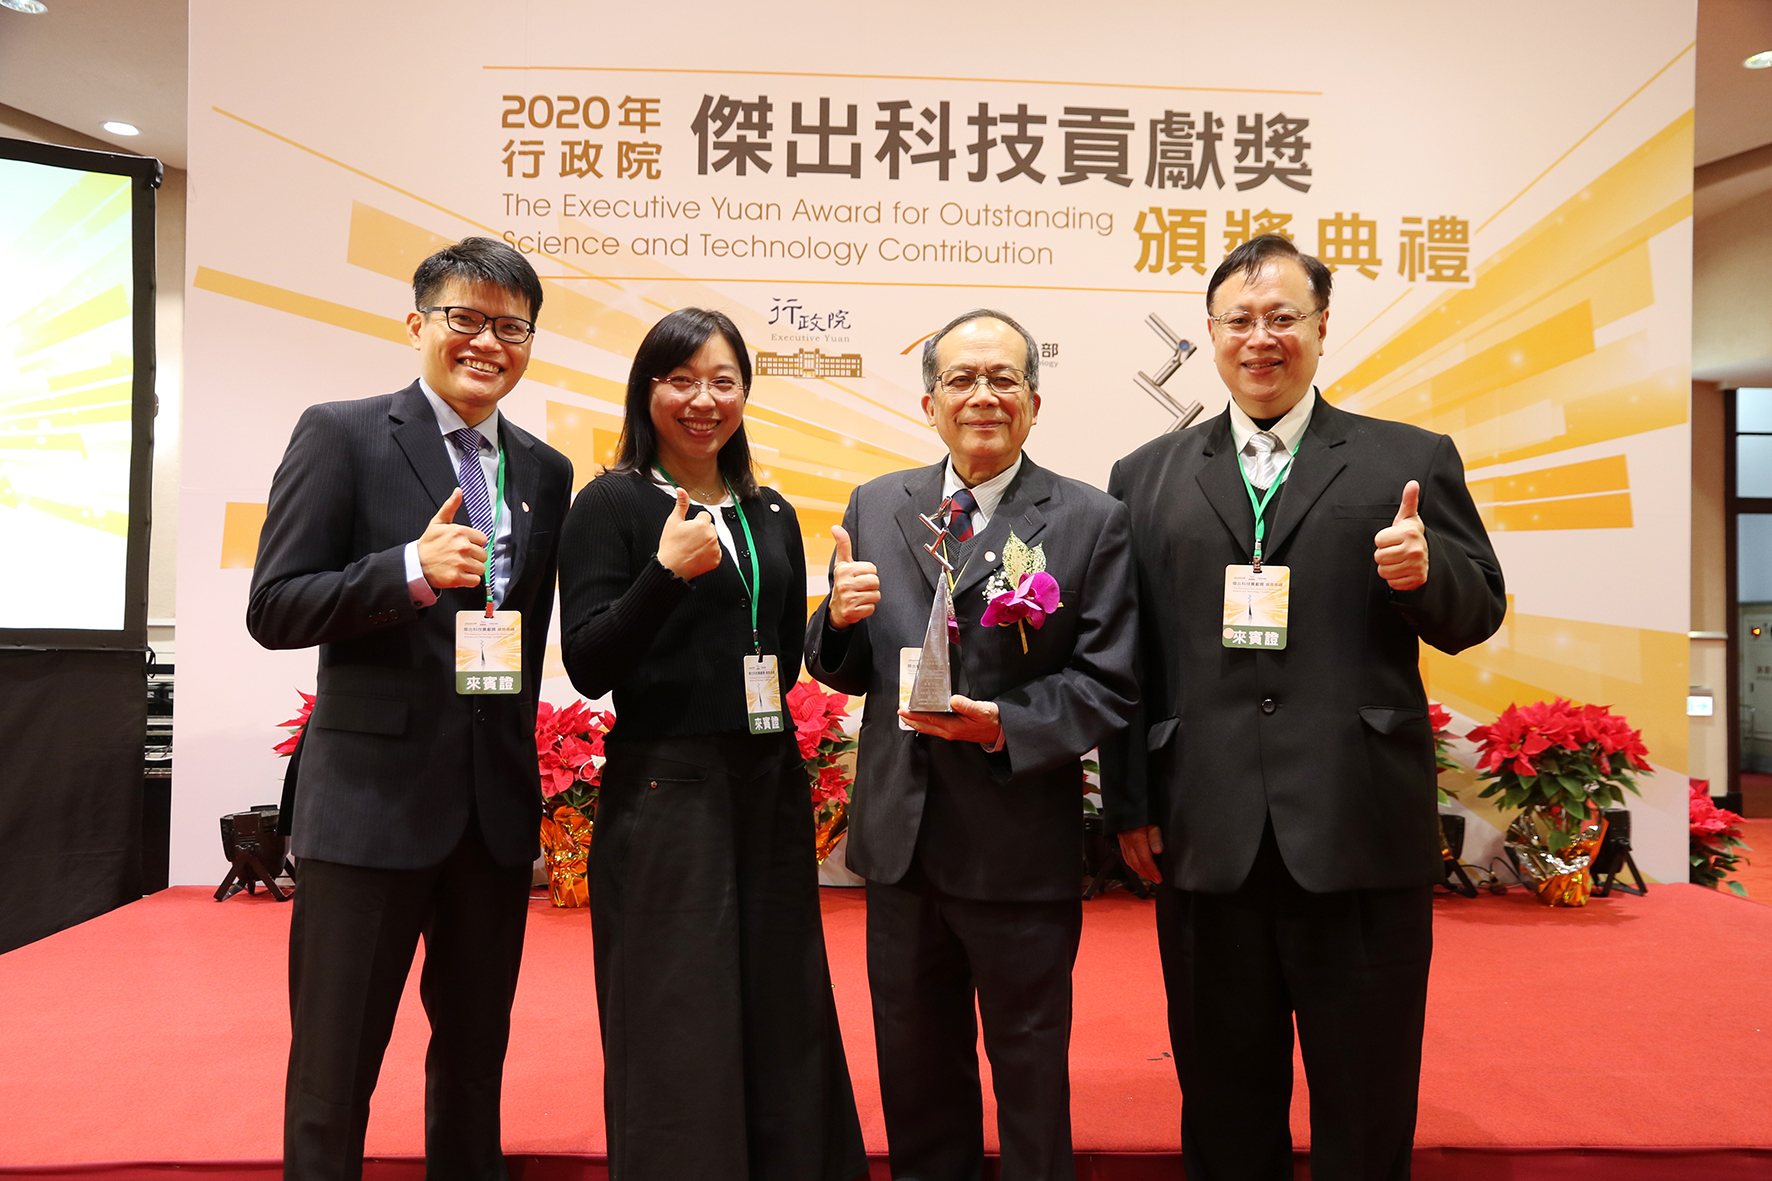 Vice President Jenn-Wen Huang of NCHU Won the Executive Yuan Outstanding Science and Technology Contribution Award